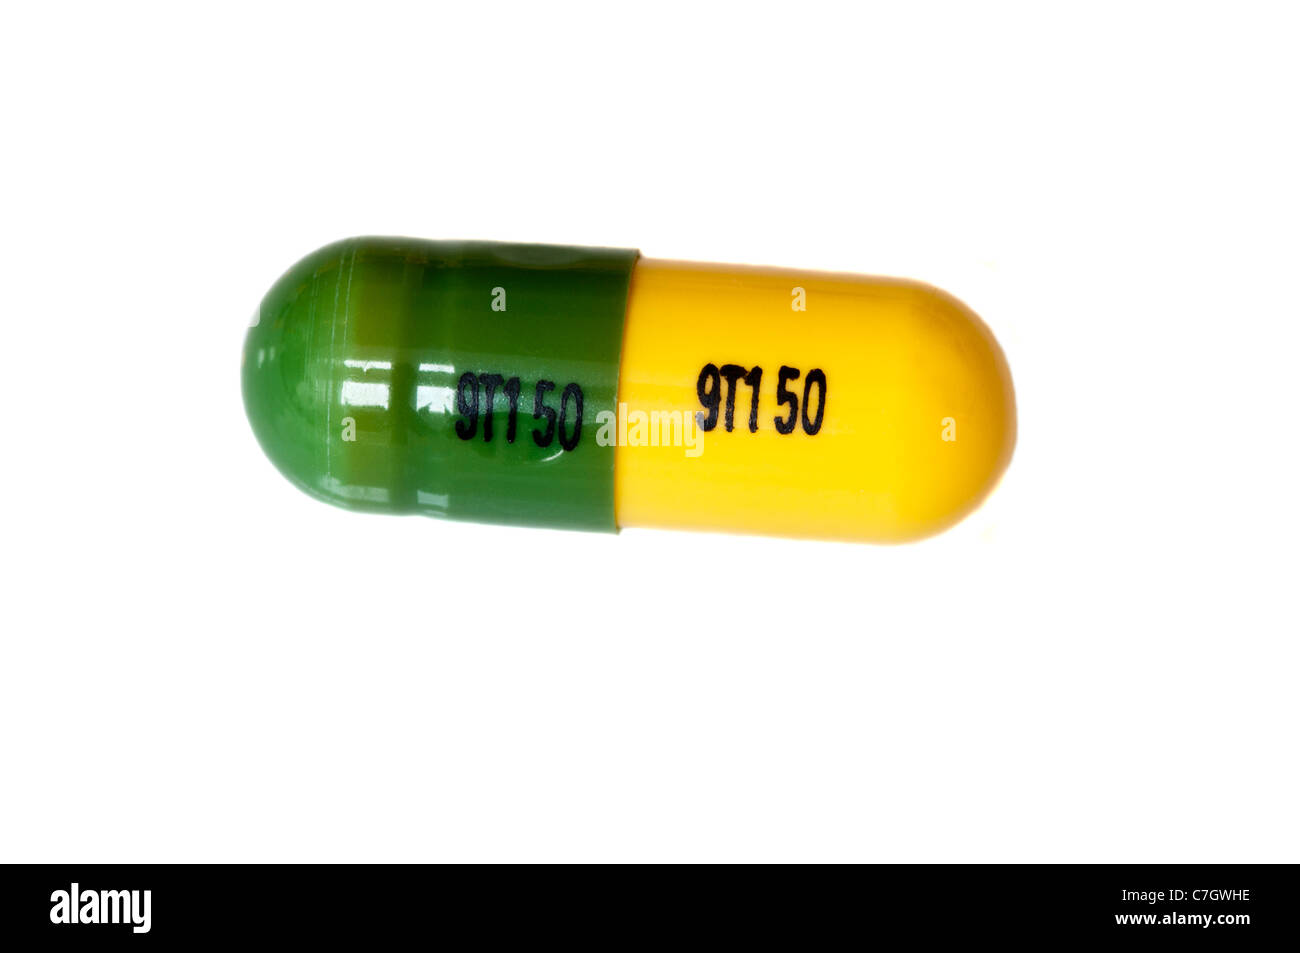 Tramadol Hydrochloride 50mg Capsule prescription drug Stock Photo